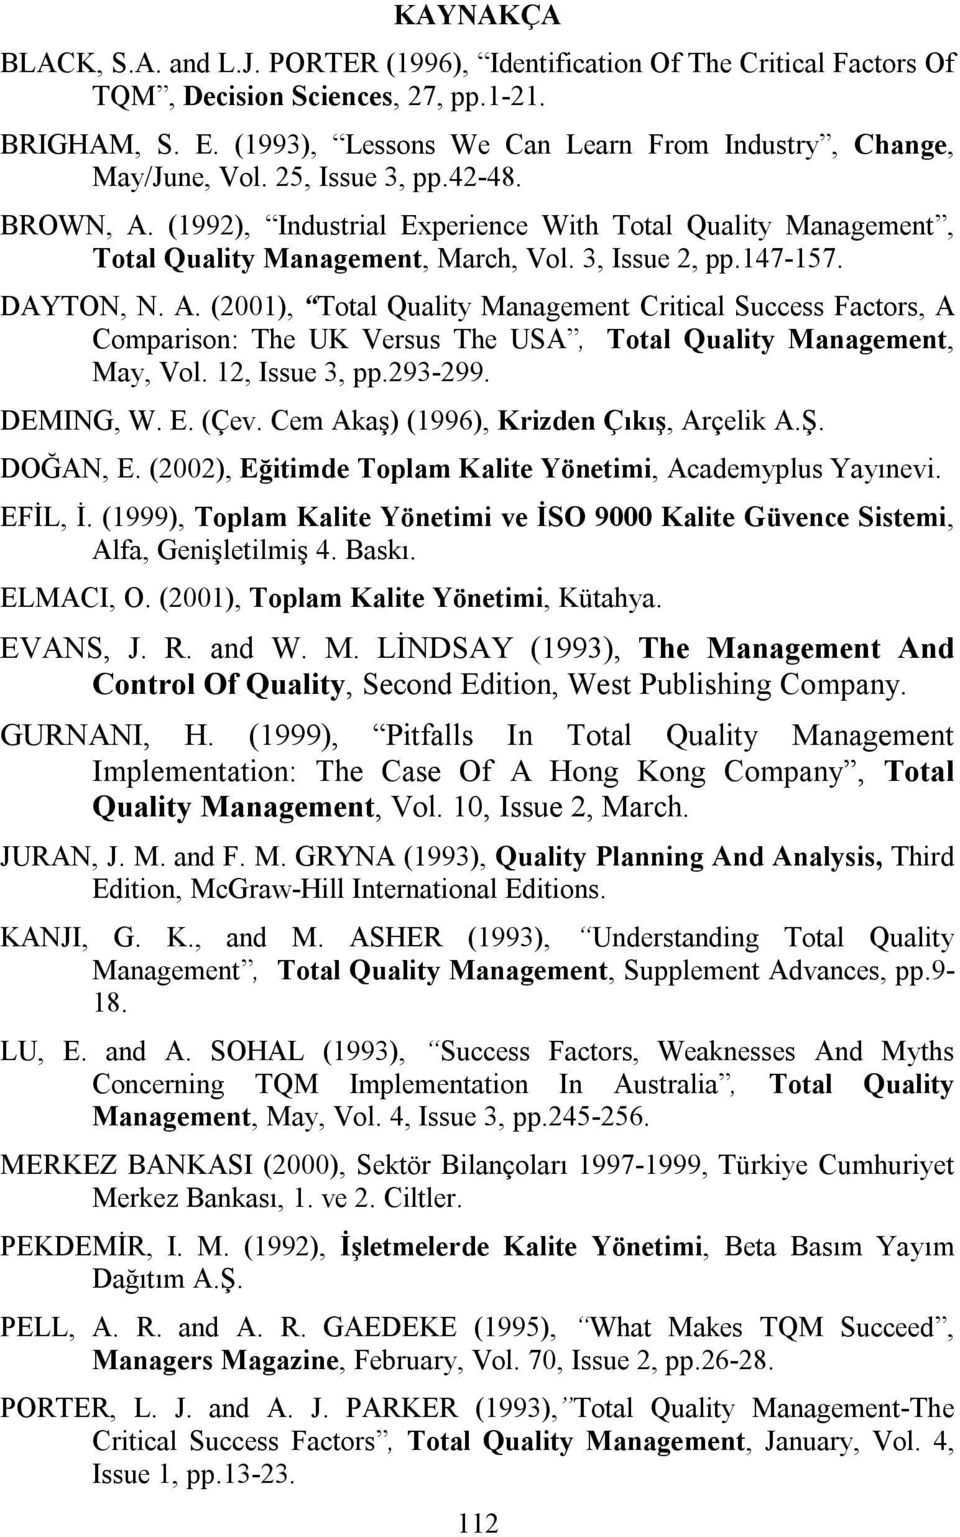 3, Issue 2, pp.147-157. DAYTON, N. A. (2001), Total Quality Management Critical Success Factors, A Comparison: The UK Versus The USA, Total Quality Management, May, Vol. 12, Issue 3, pp.293-299.